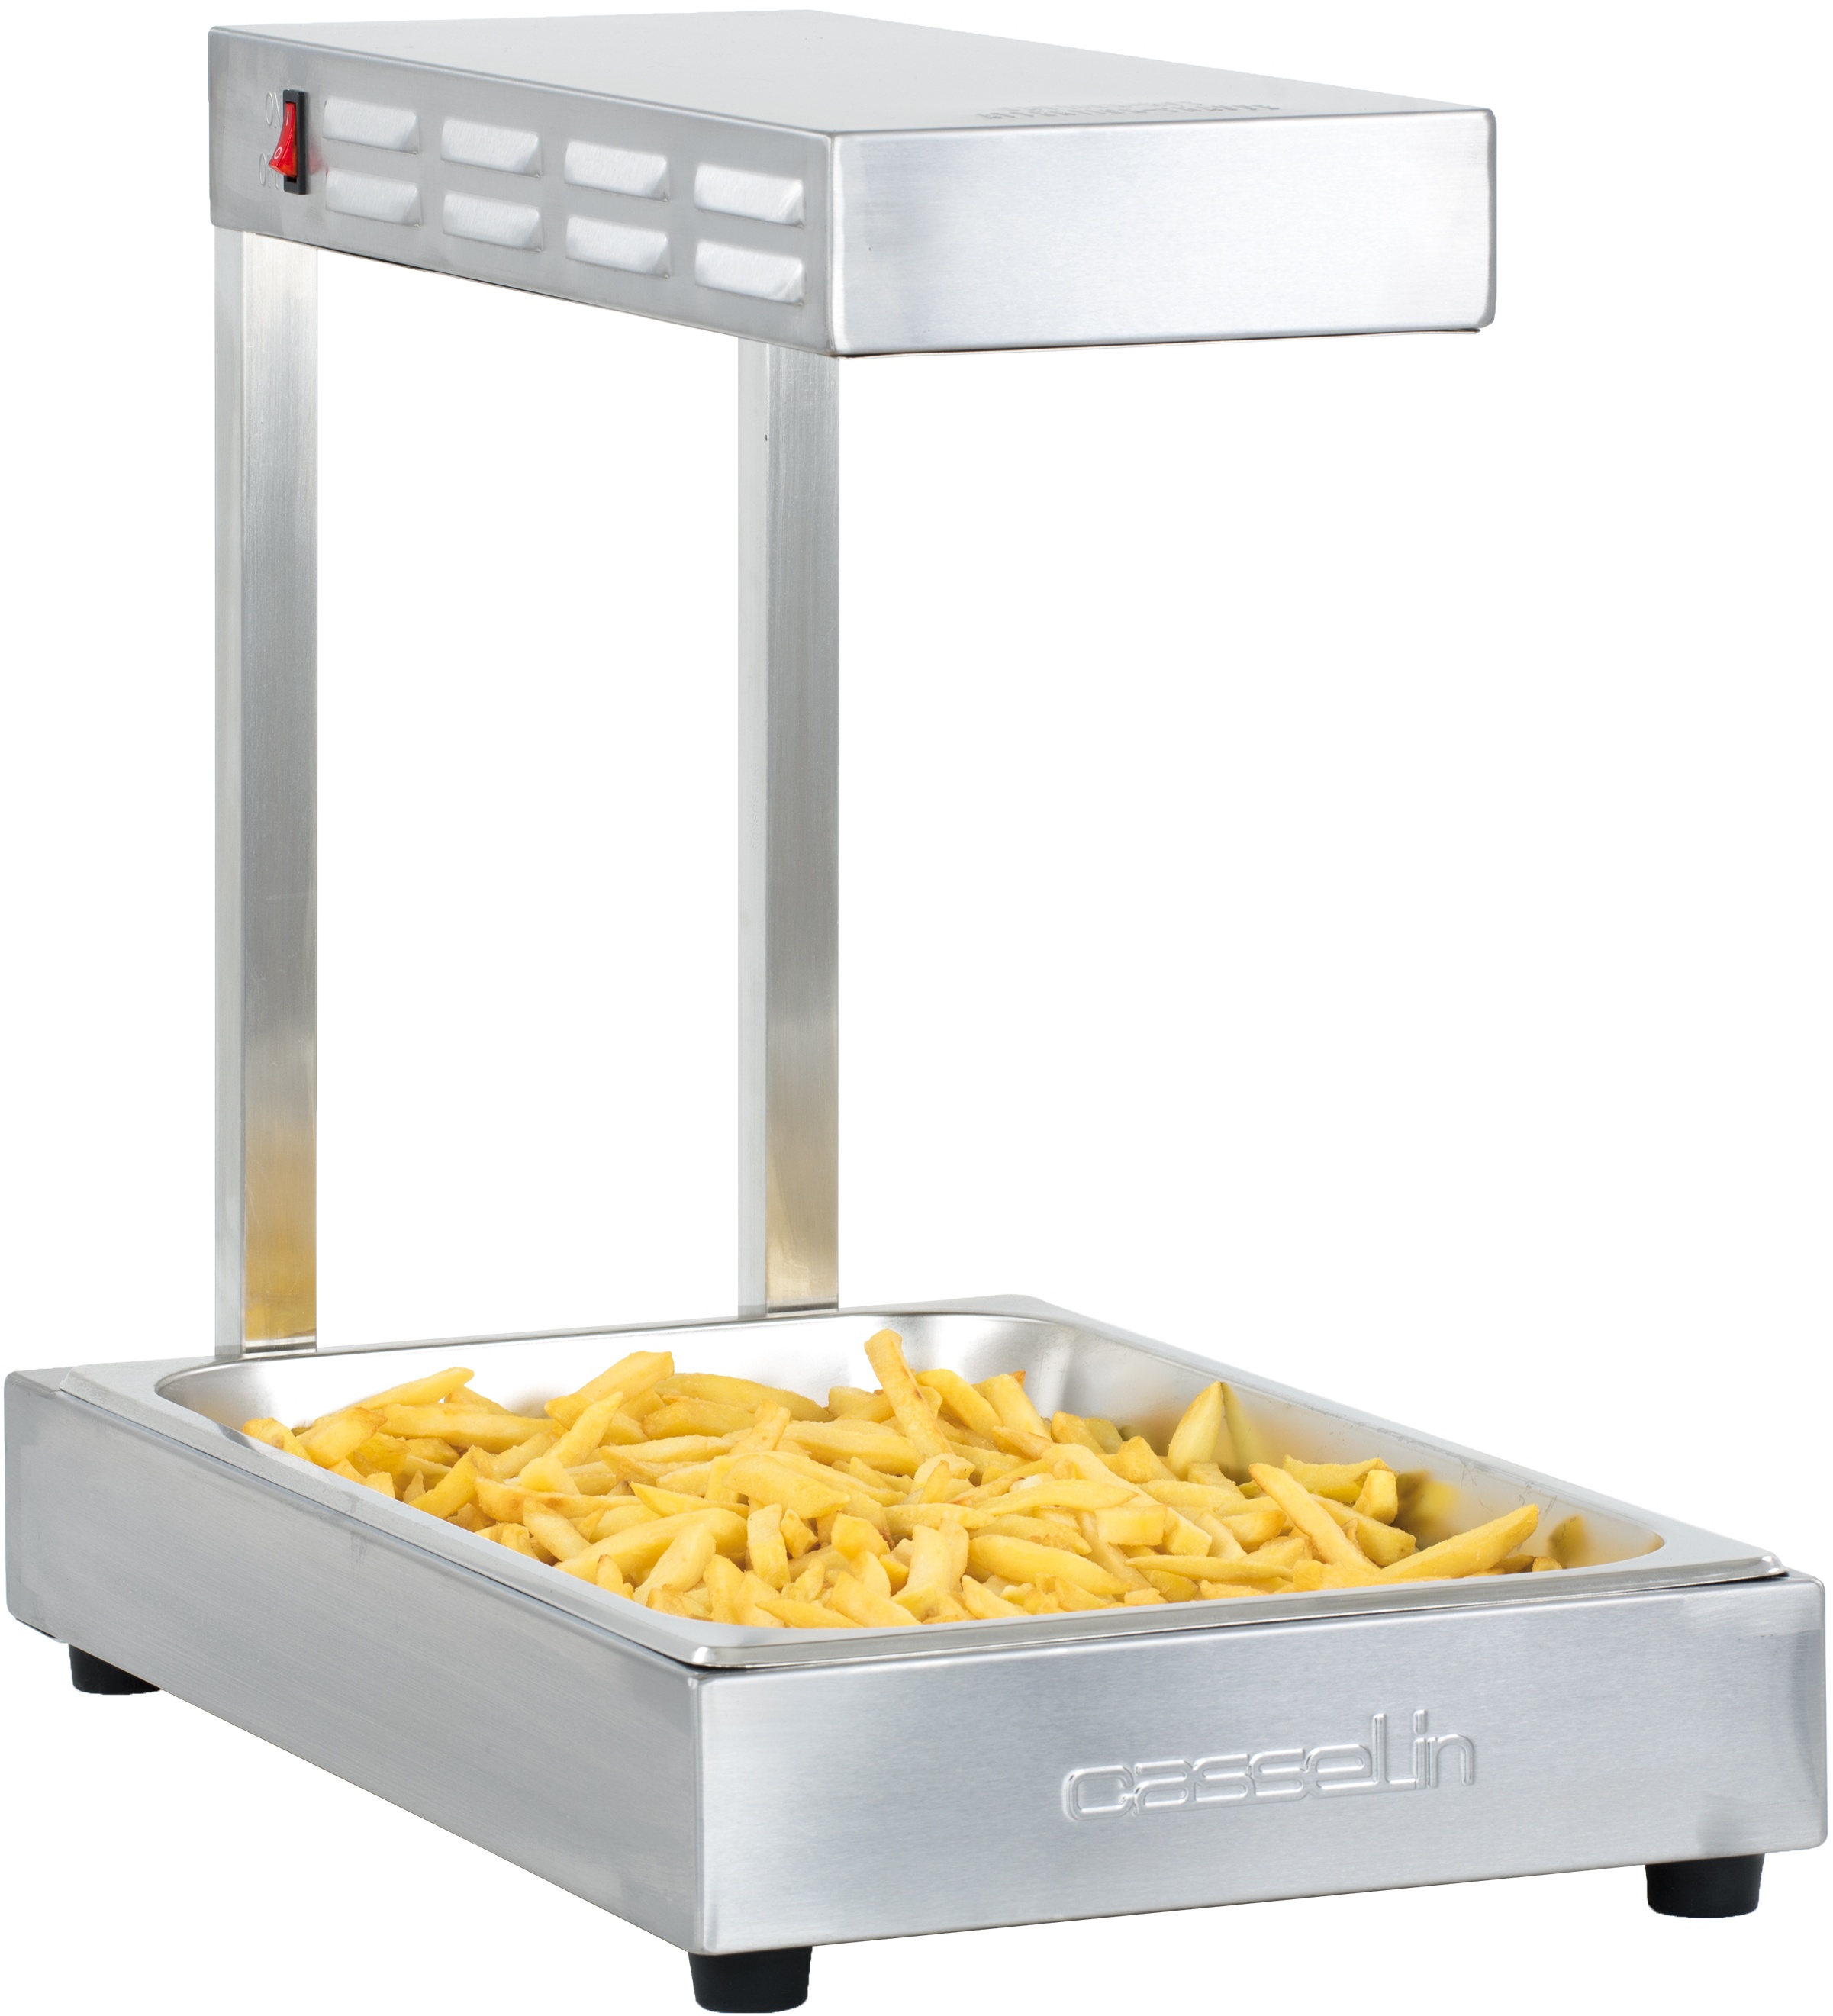 CASSELIN - Chauffe-frites GN 1/1 Quartz